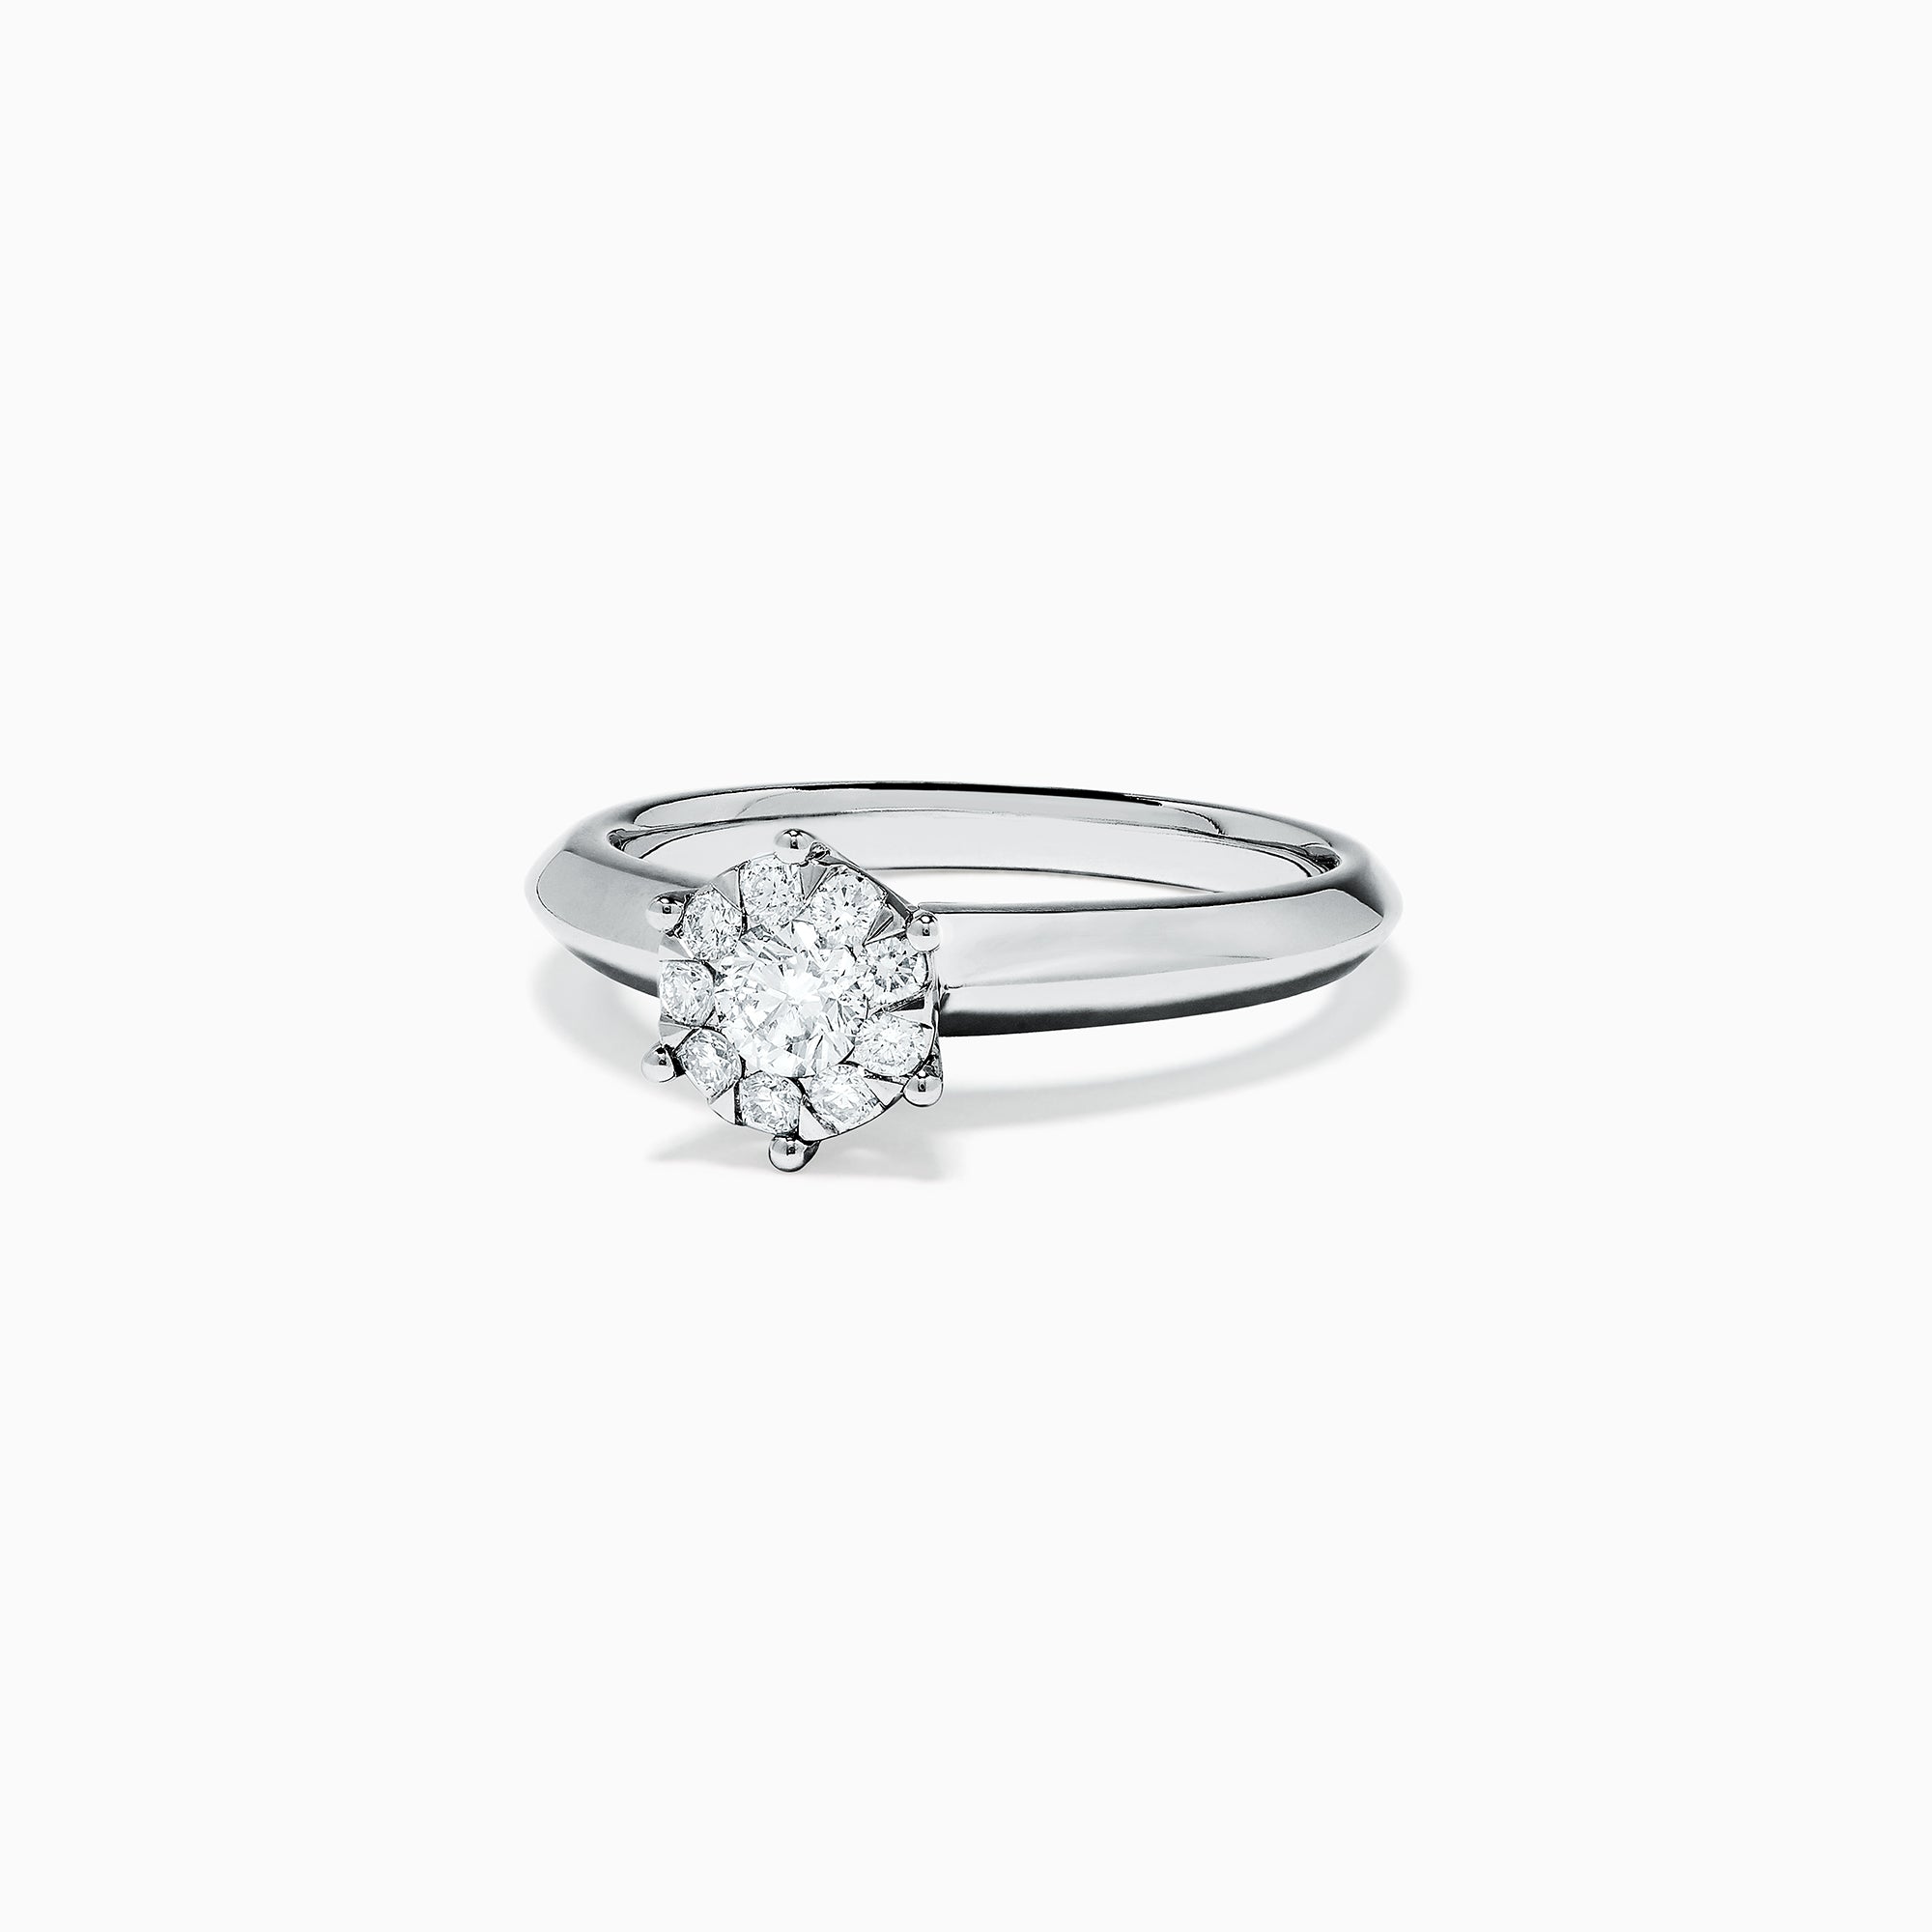 Effy Bridal 14K White Gold Diamond Ring, 0.39 TCW